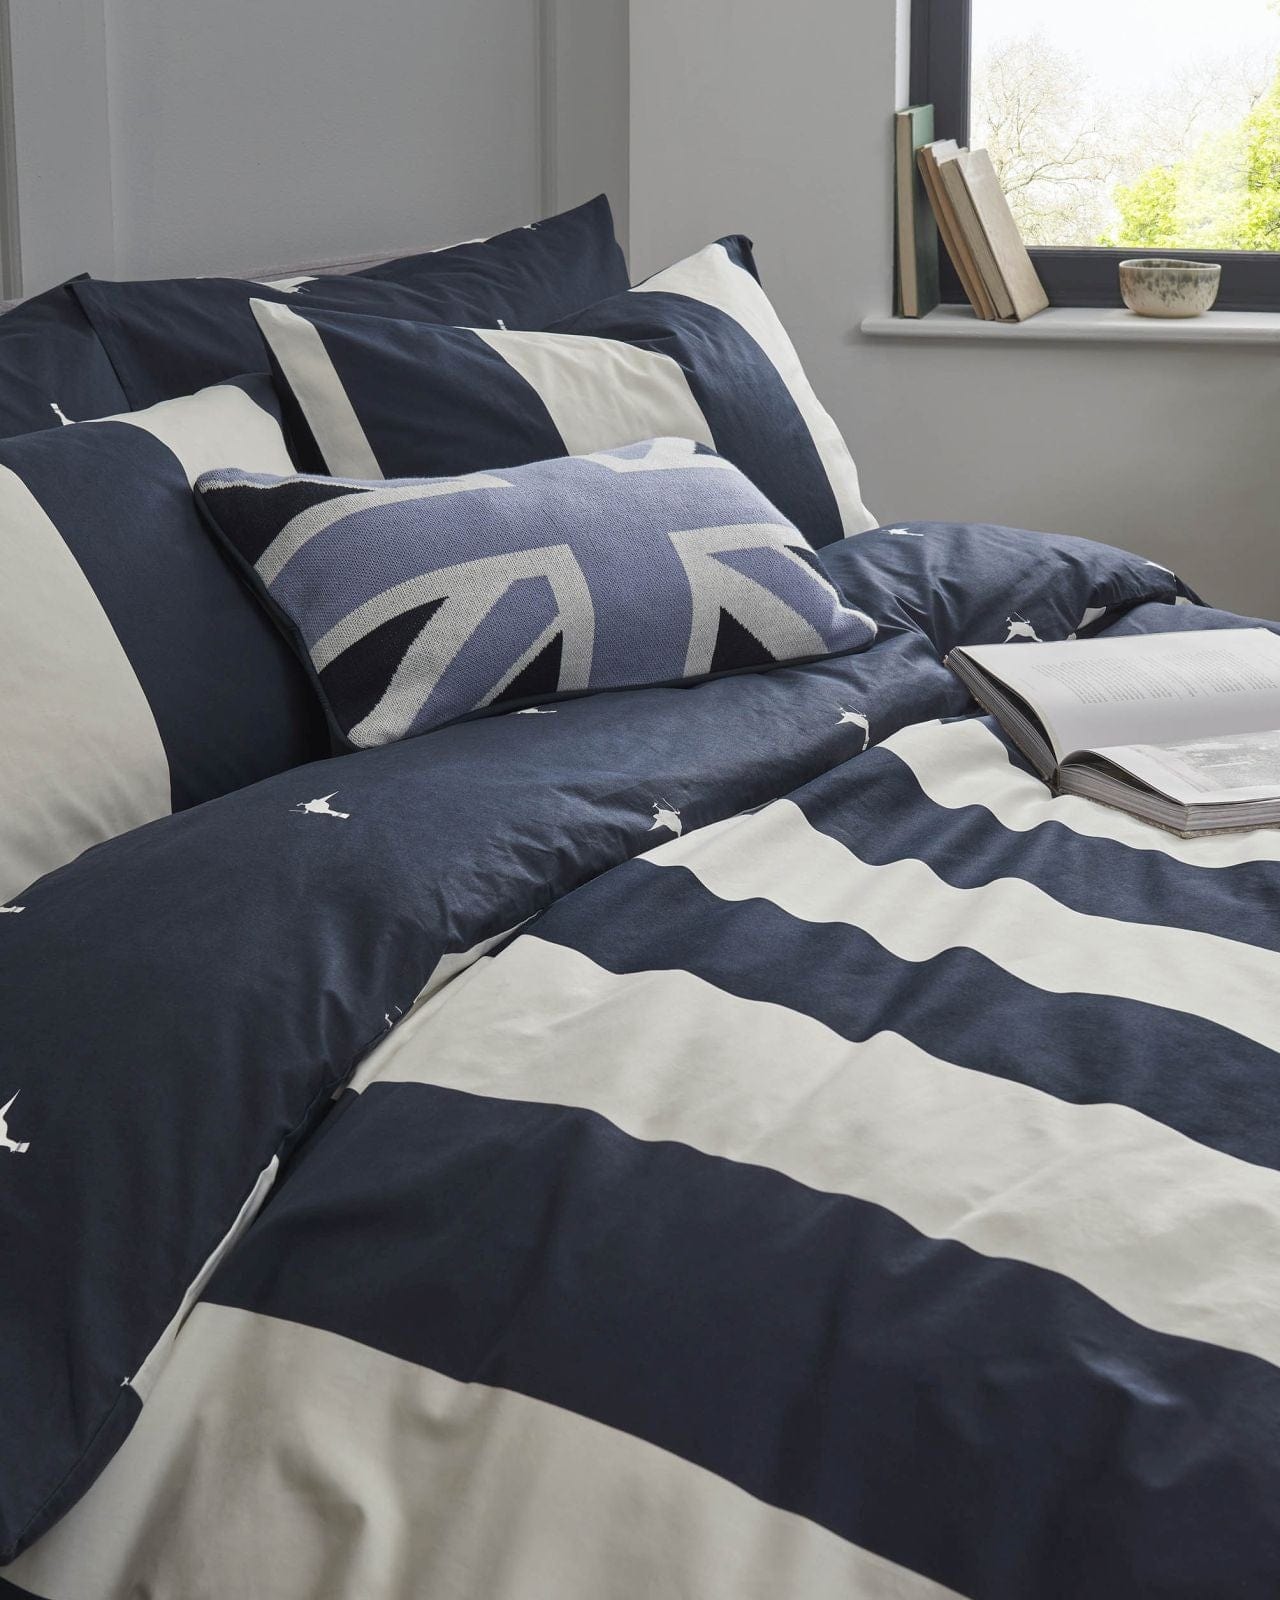 Ashley Wilde Interior Design Range Single Duvet set Jack Wills Heritage Stripe Navy-Vintage White Bedding